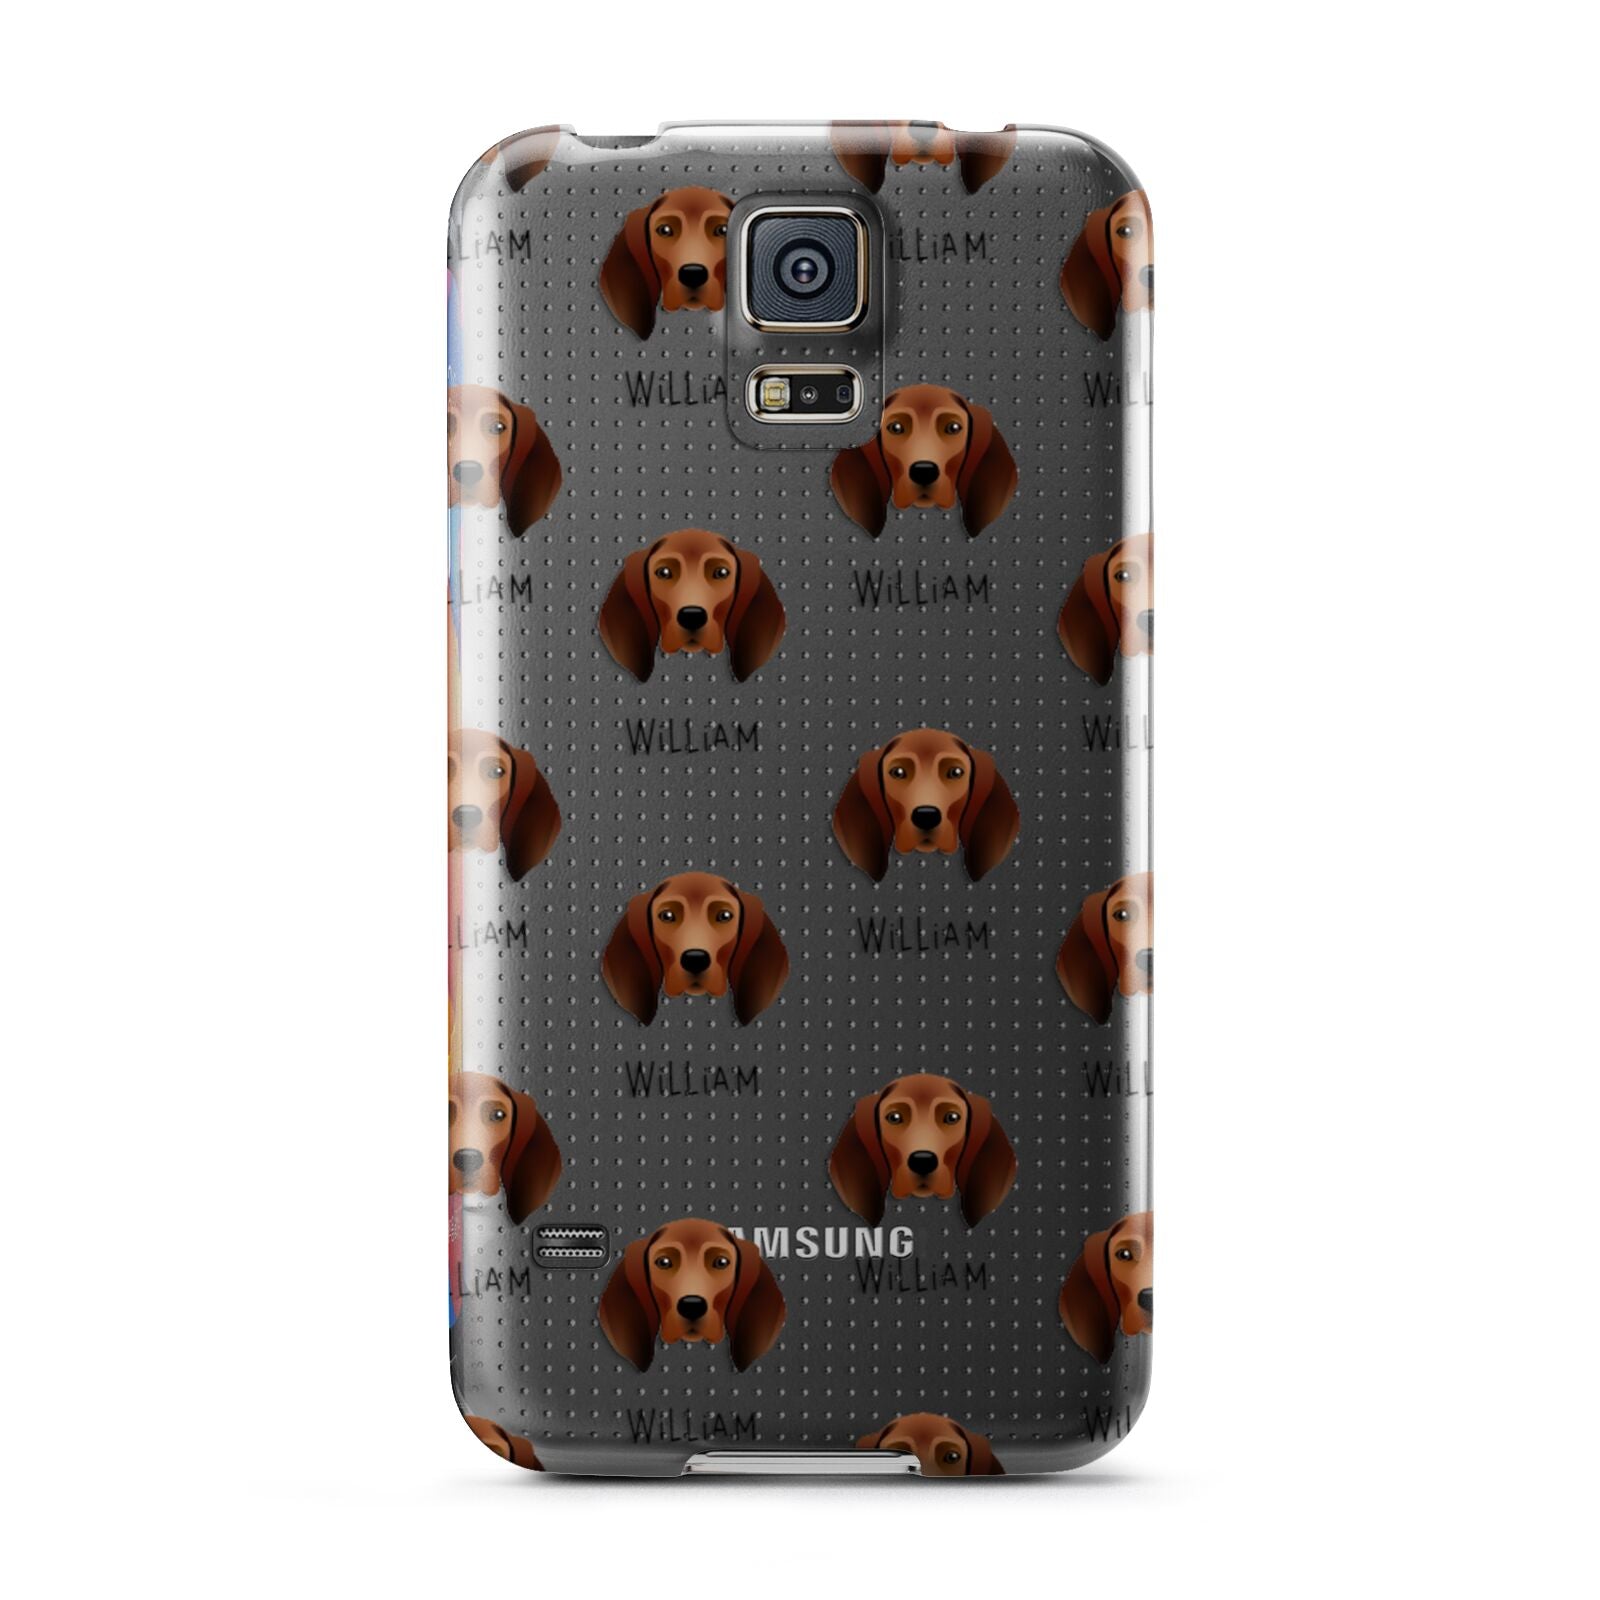 Redbone Coonhound Icon with Name Samsung Galaxy S5 Case